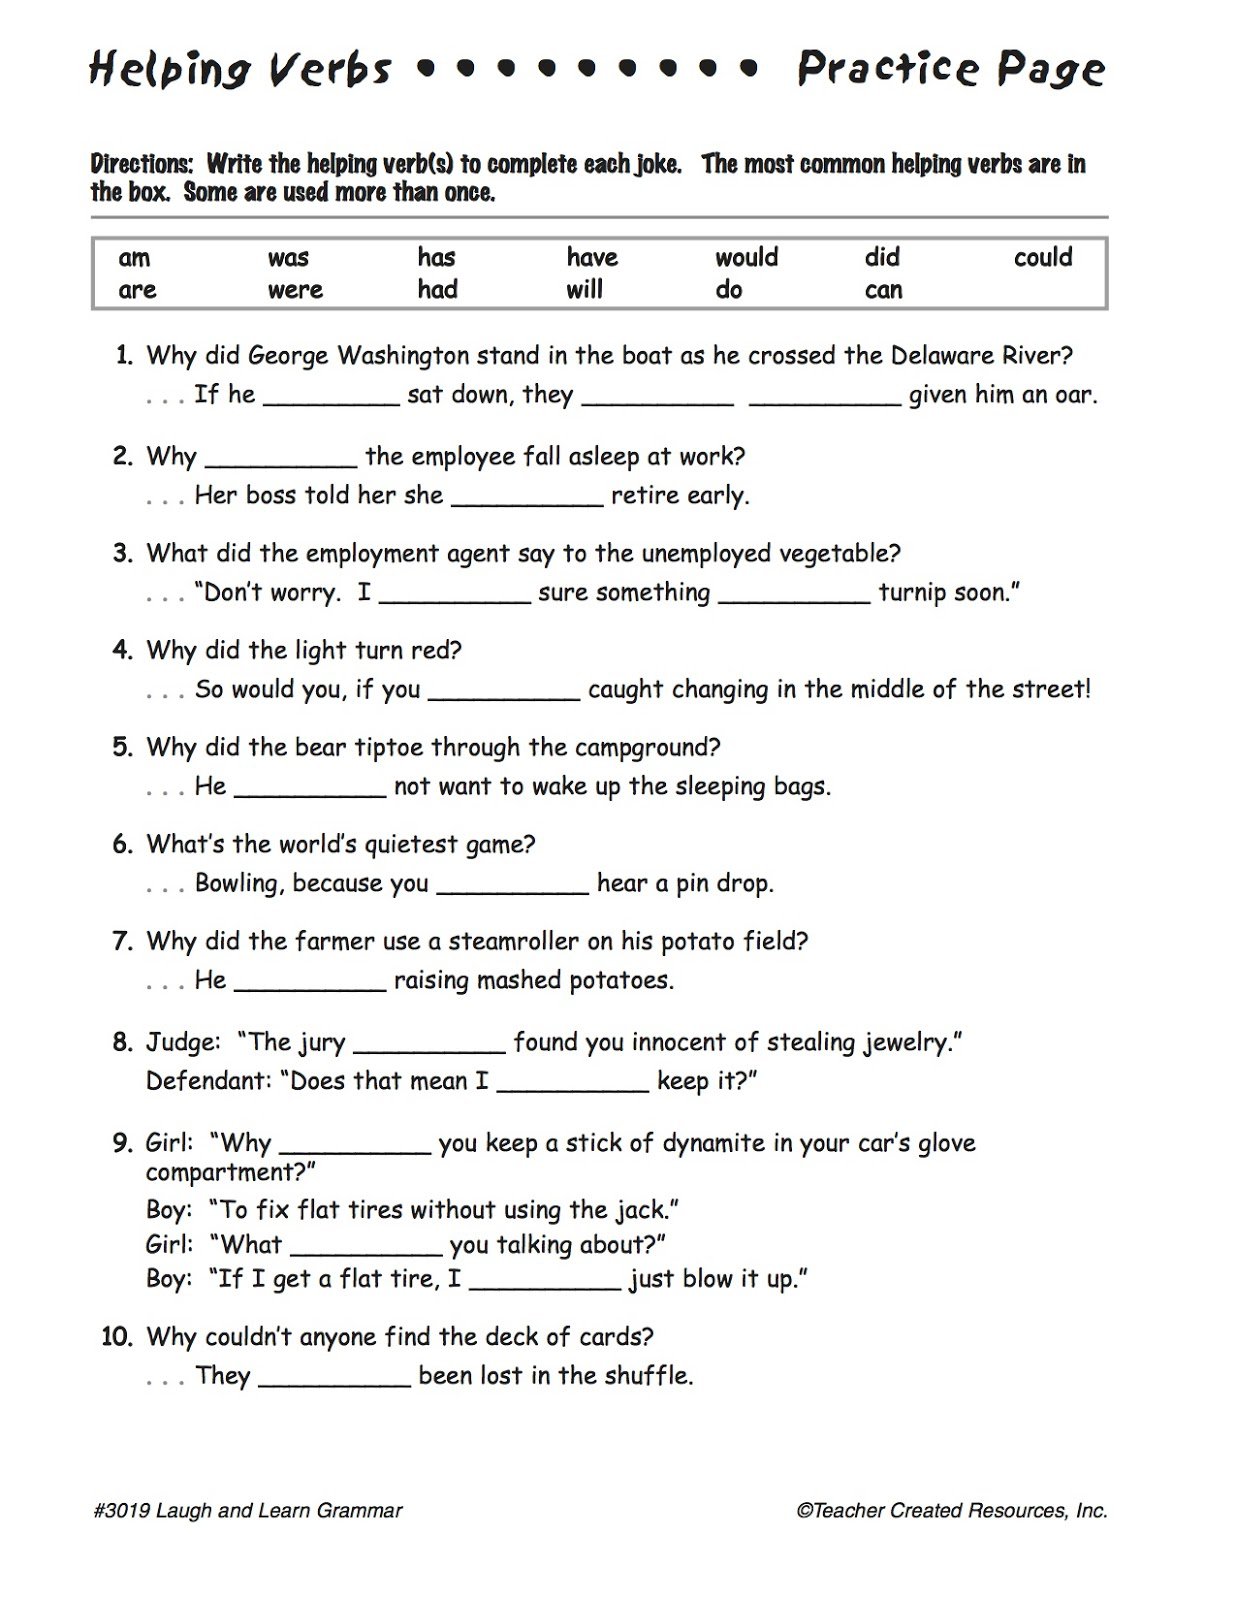 Helping Verbs Worksheets Middle School The Best Worksheets Image